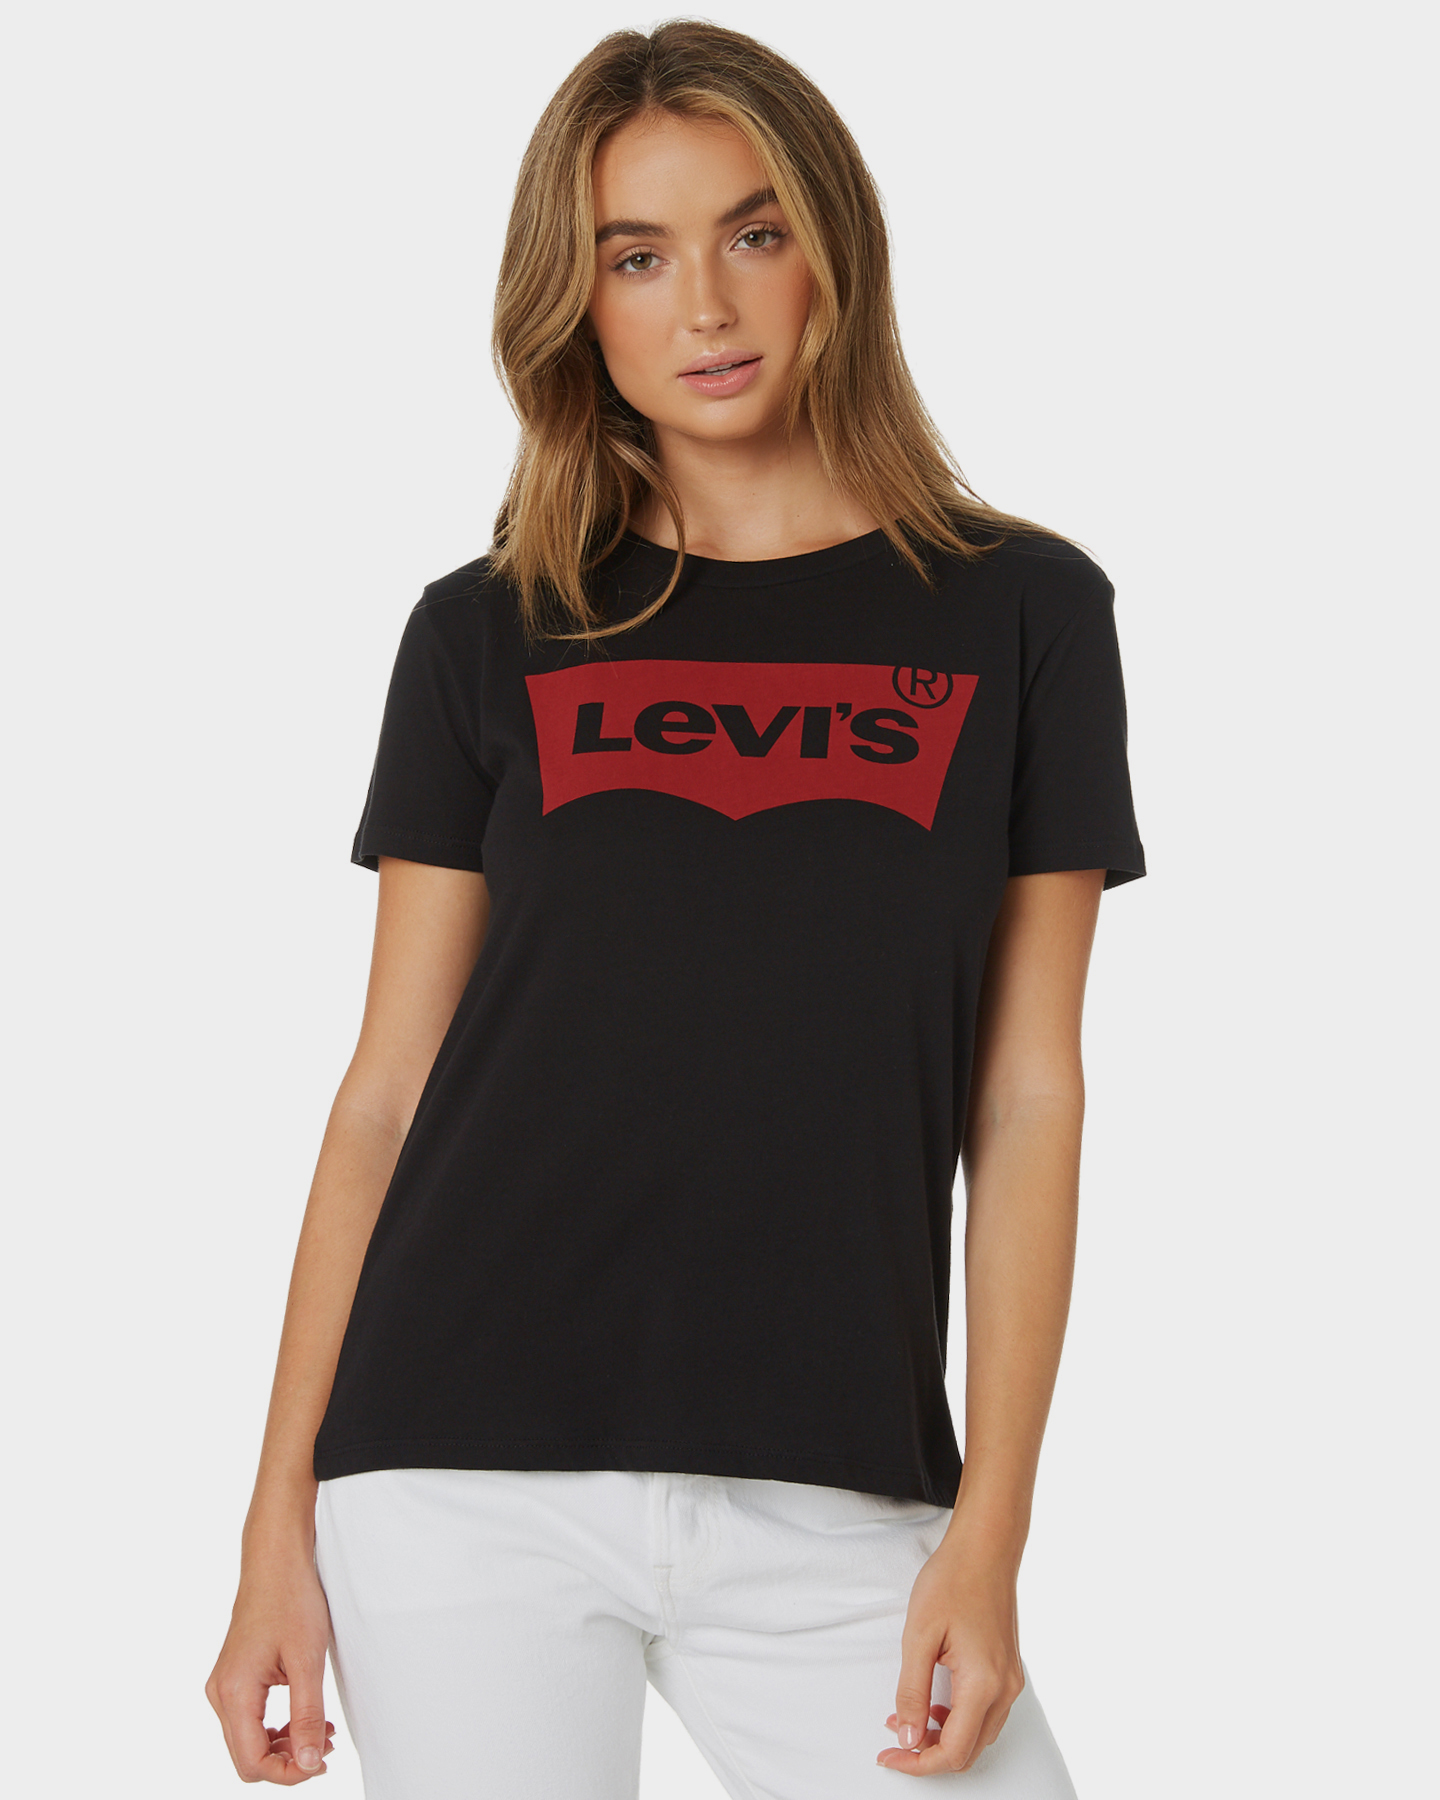 womens black levis t shirt